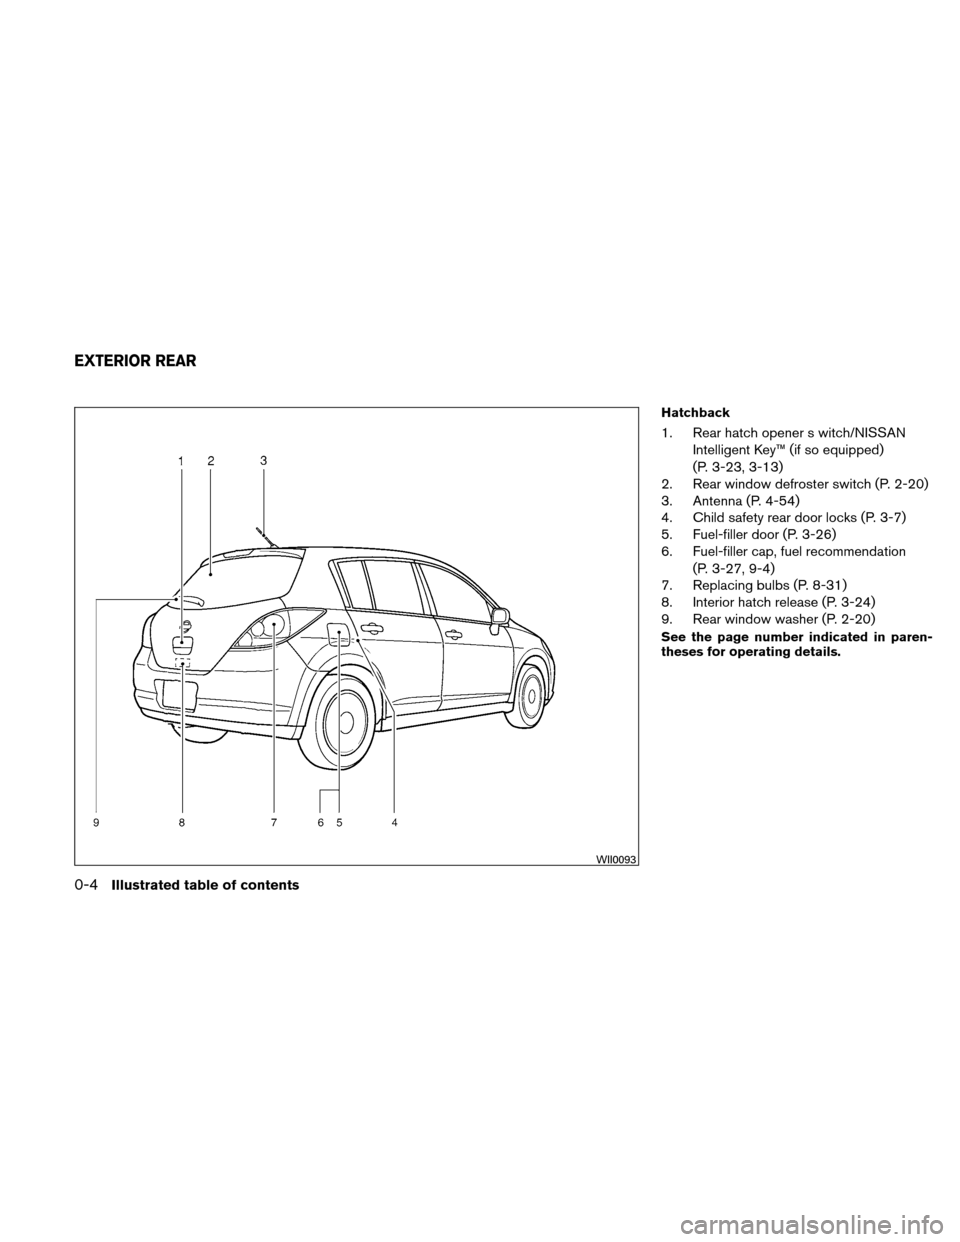 NISSAN VERSA HATCHBACK 2011 1.G User Guide Hatchback
1. Rear hatch opener s witch/NISSANIntelligent Key™ (if so equipped)
(P. 3-23, 3-13)
2. Rear window defroster switch (P. 2-20)
3. Antenna (P. 4-54)
4. Child safety rear door locks (P. 3-7)